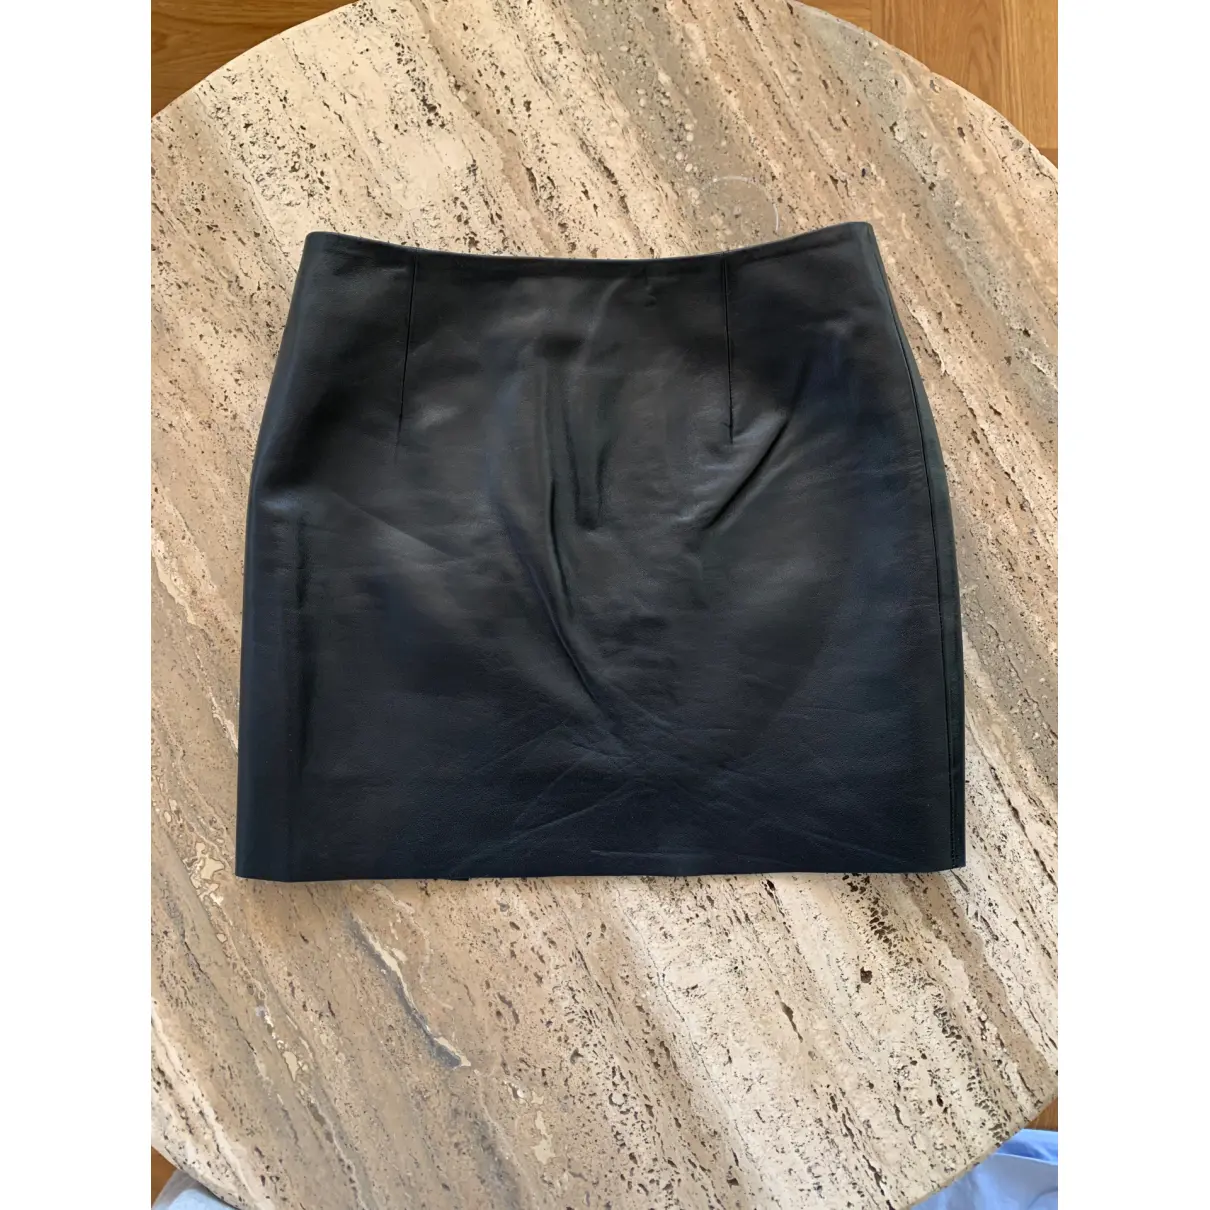 Buy Acne Studios Leather mini skirt online